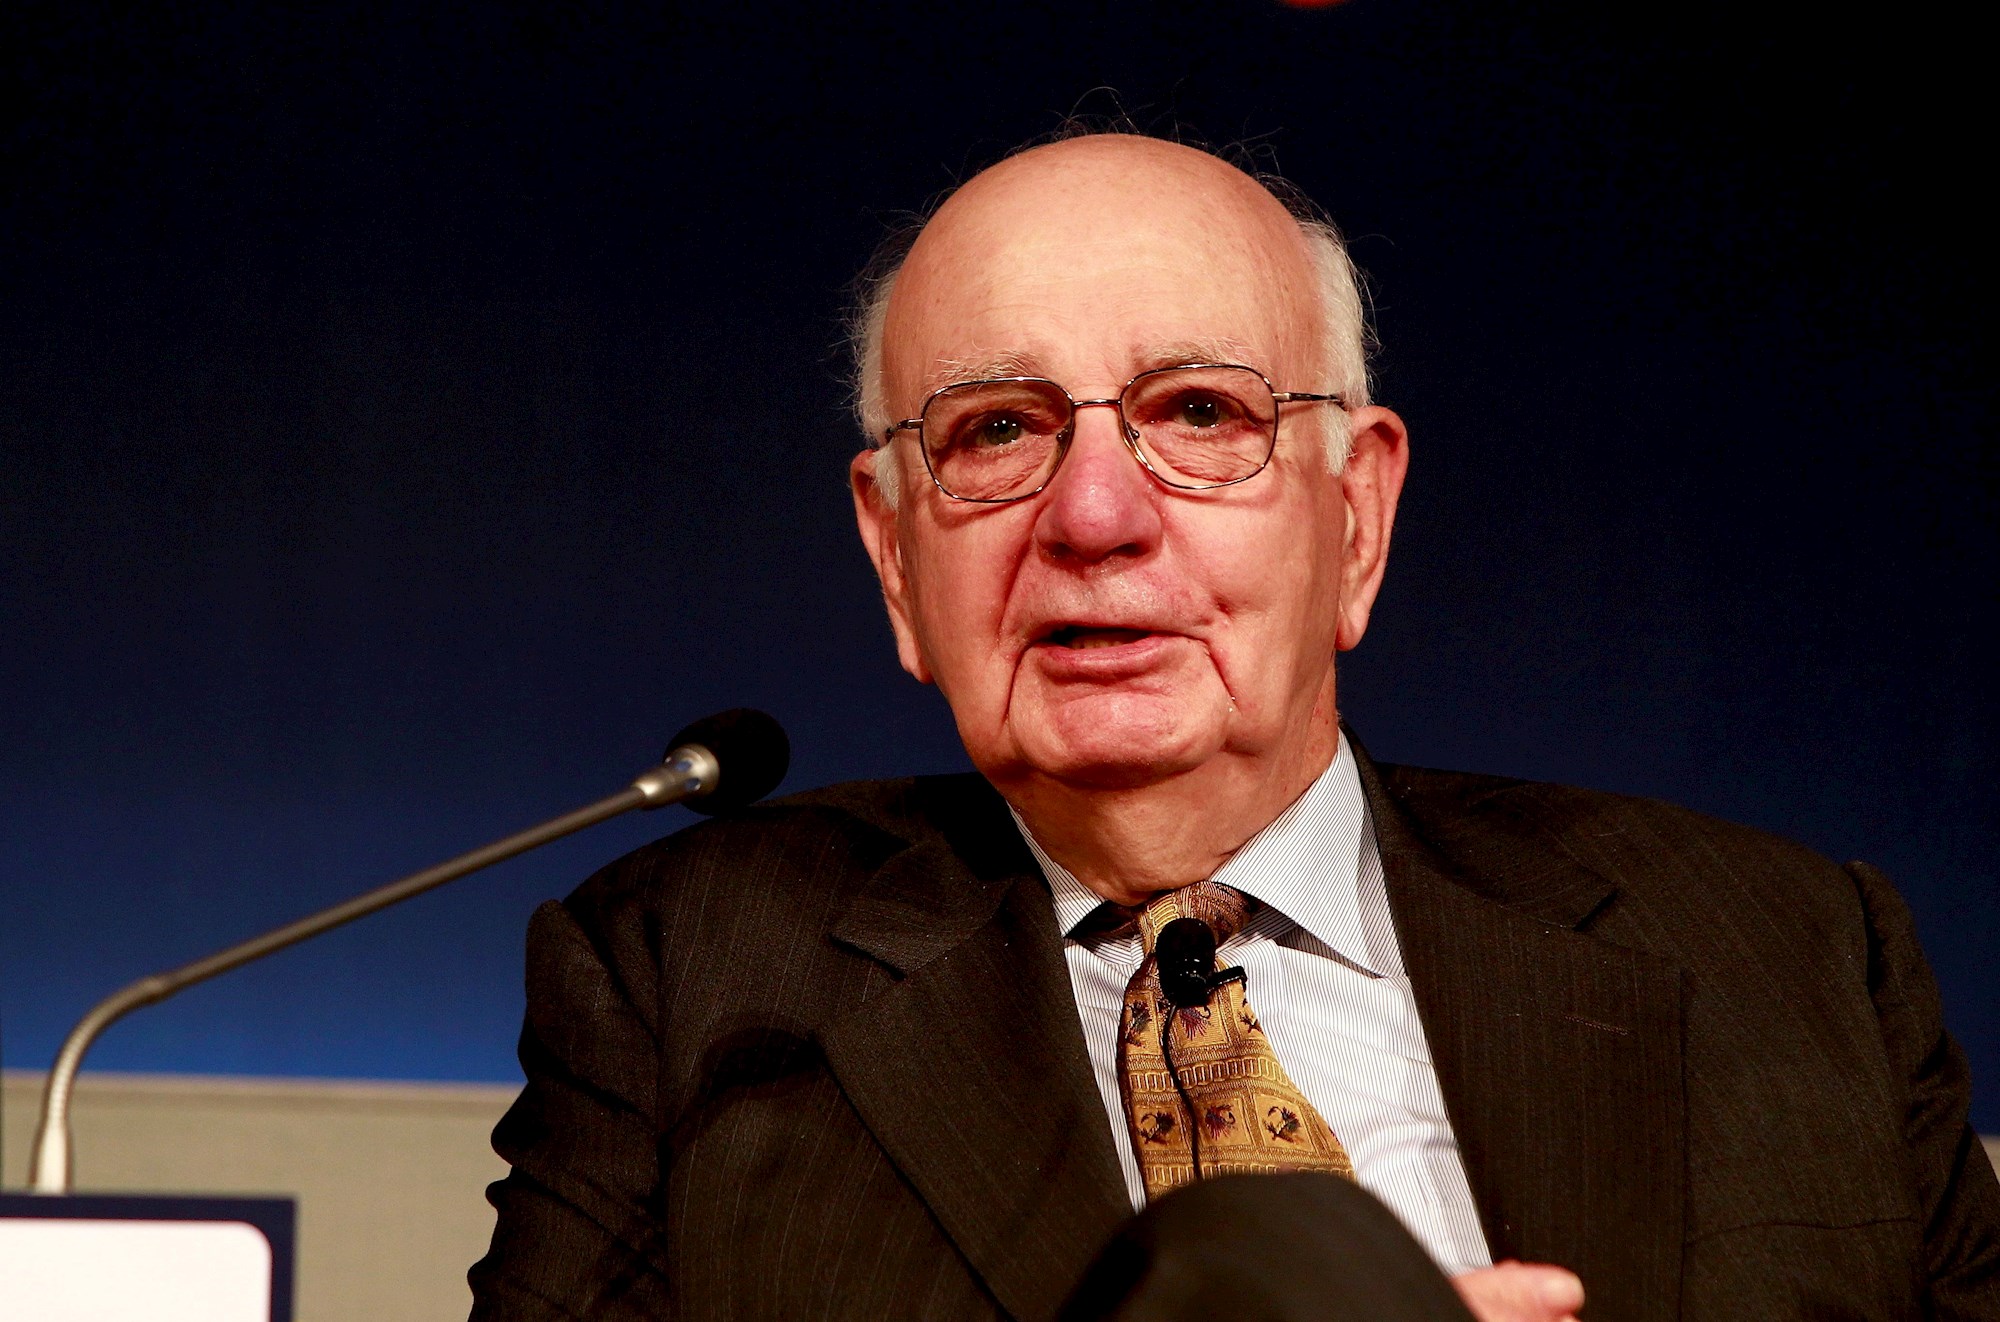 Muere Paul Volcker, expresidente de la Reserva Federal de EEUU